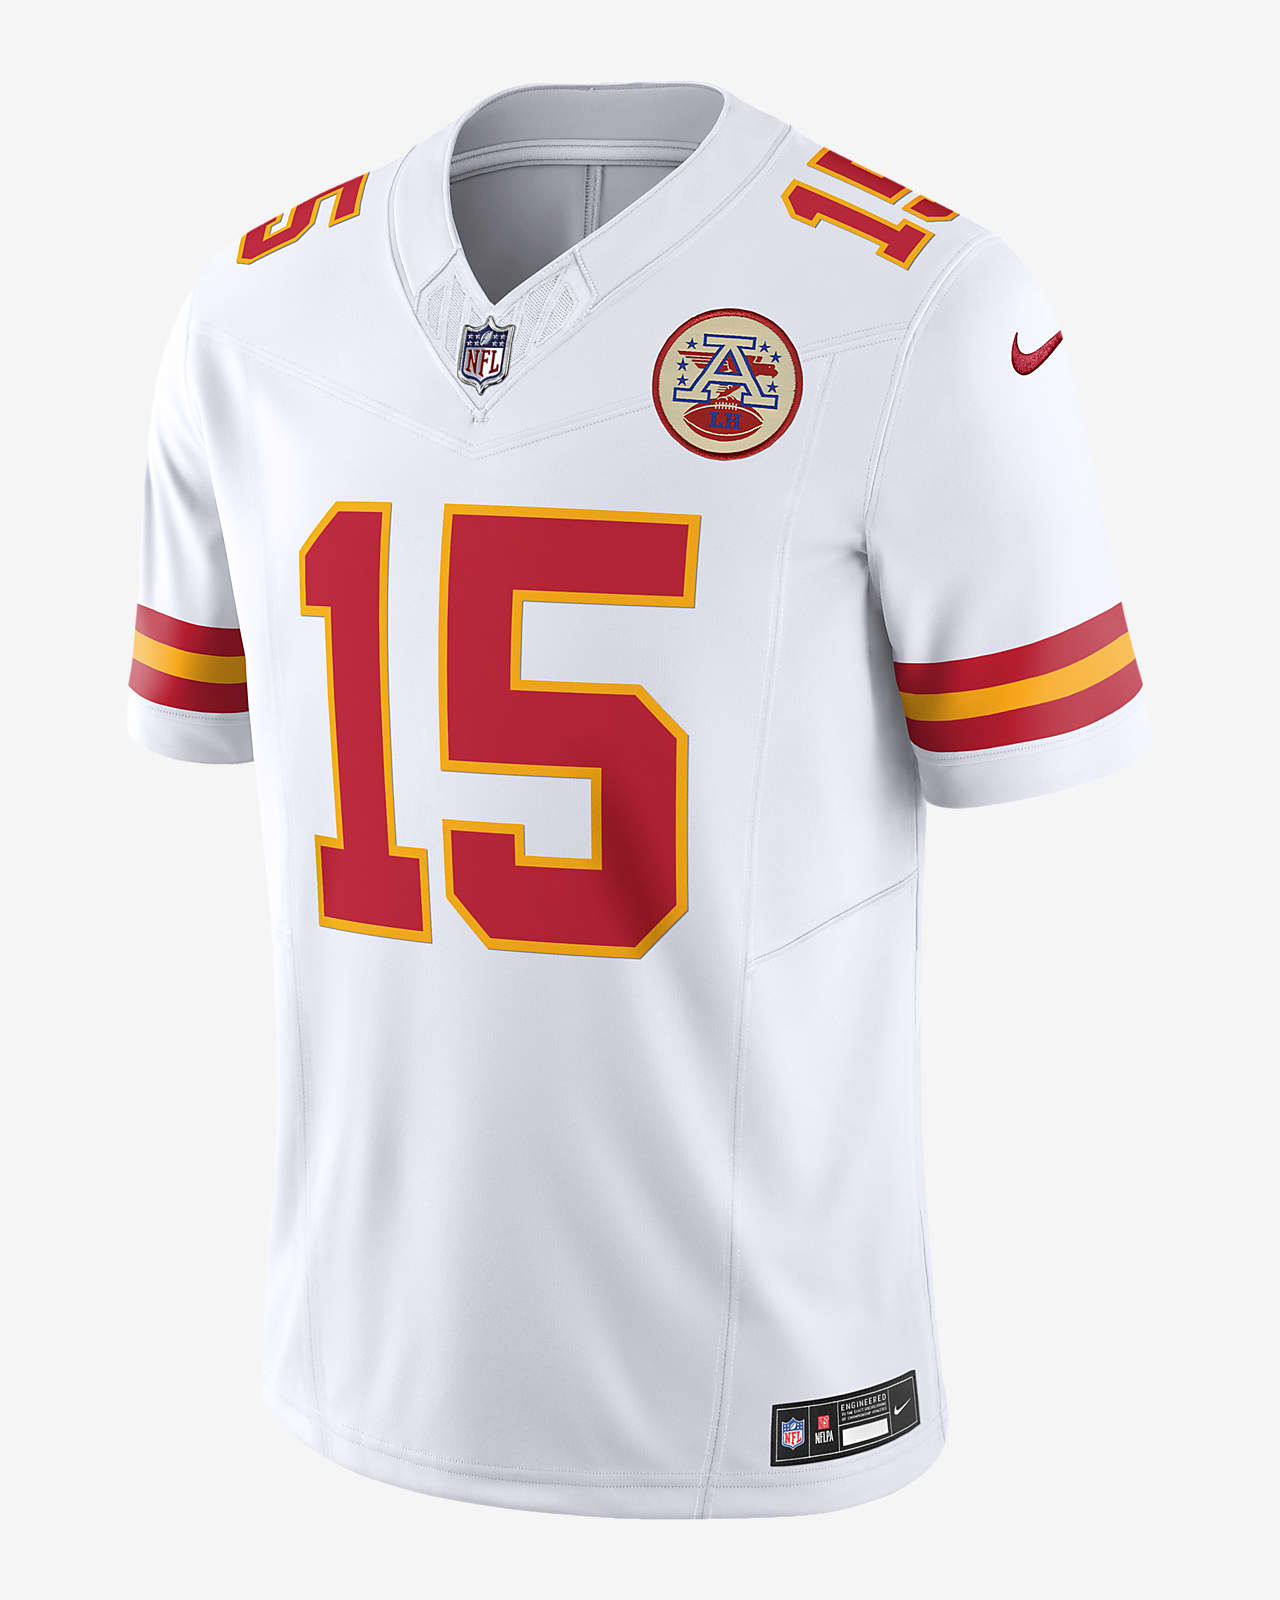 Jersey de fútbol americano Nike Dri-FIT de la NFL Limited para hombre Patrick Mahomes Kansas City Chiefs